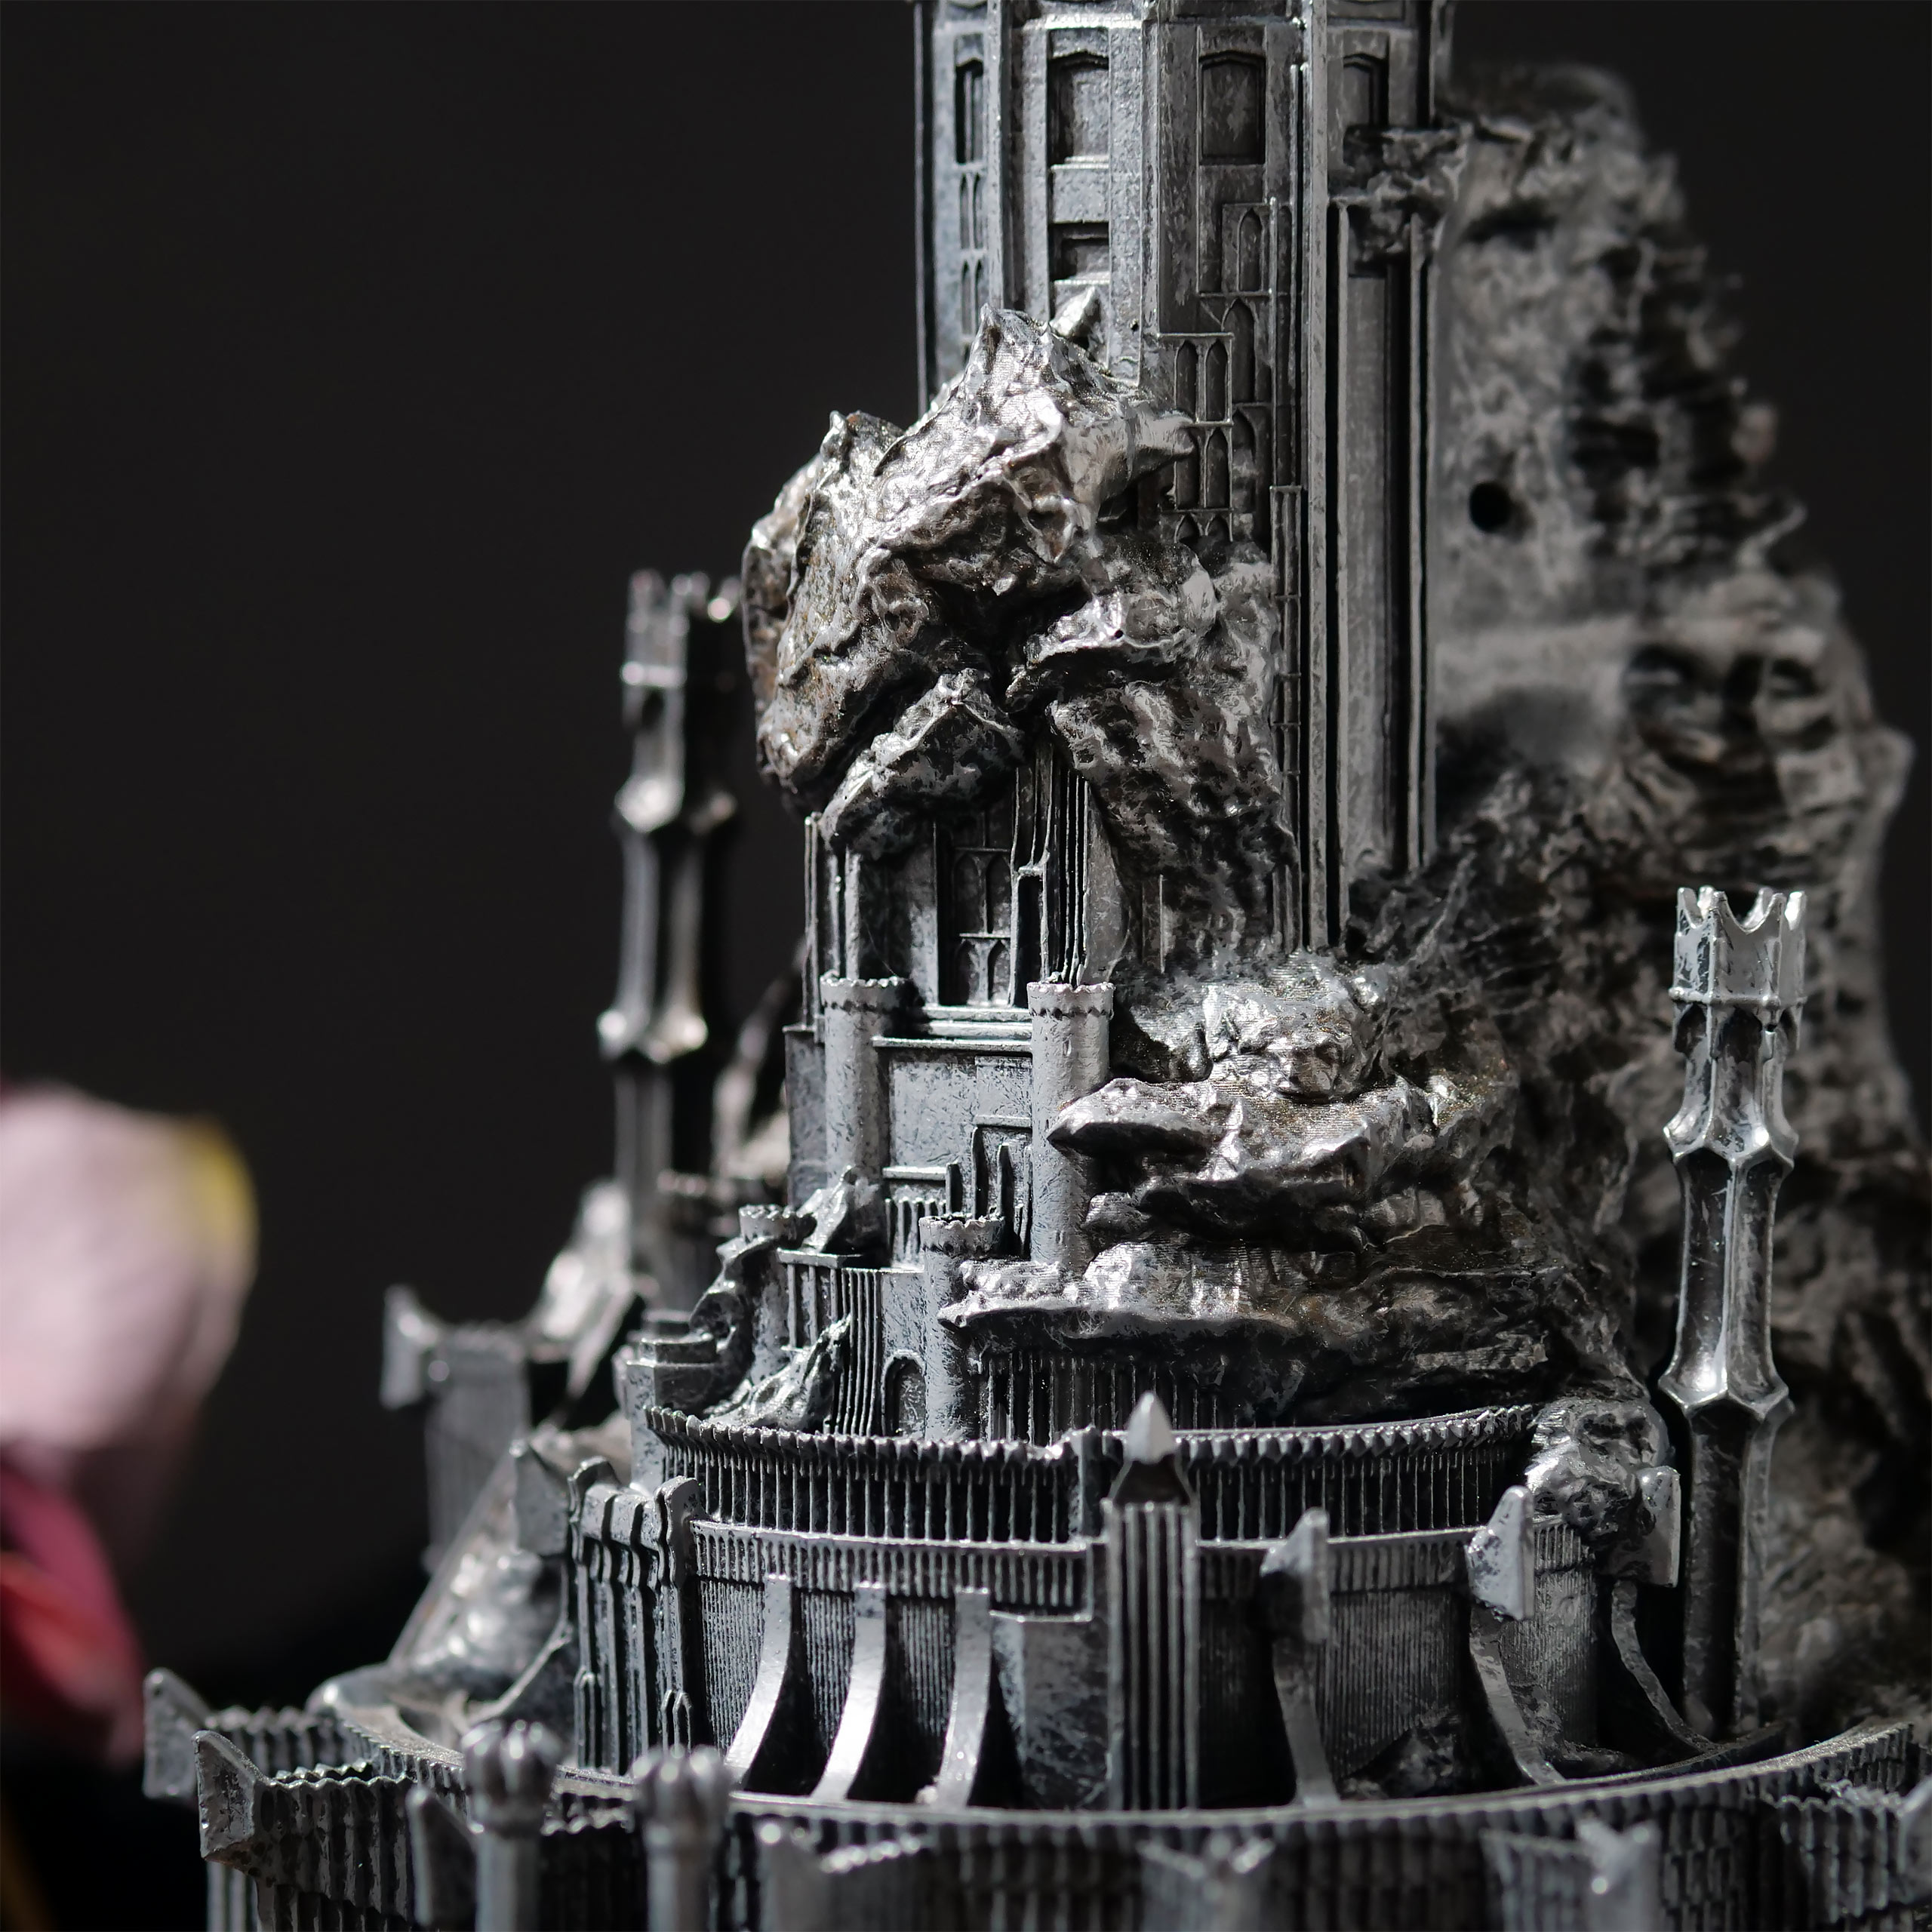 Barad-dûr Terugstroom Wierookwaterval Miniatuur Replica - Heer der Ringen